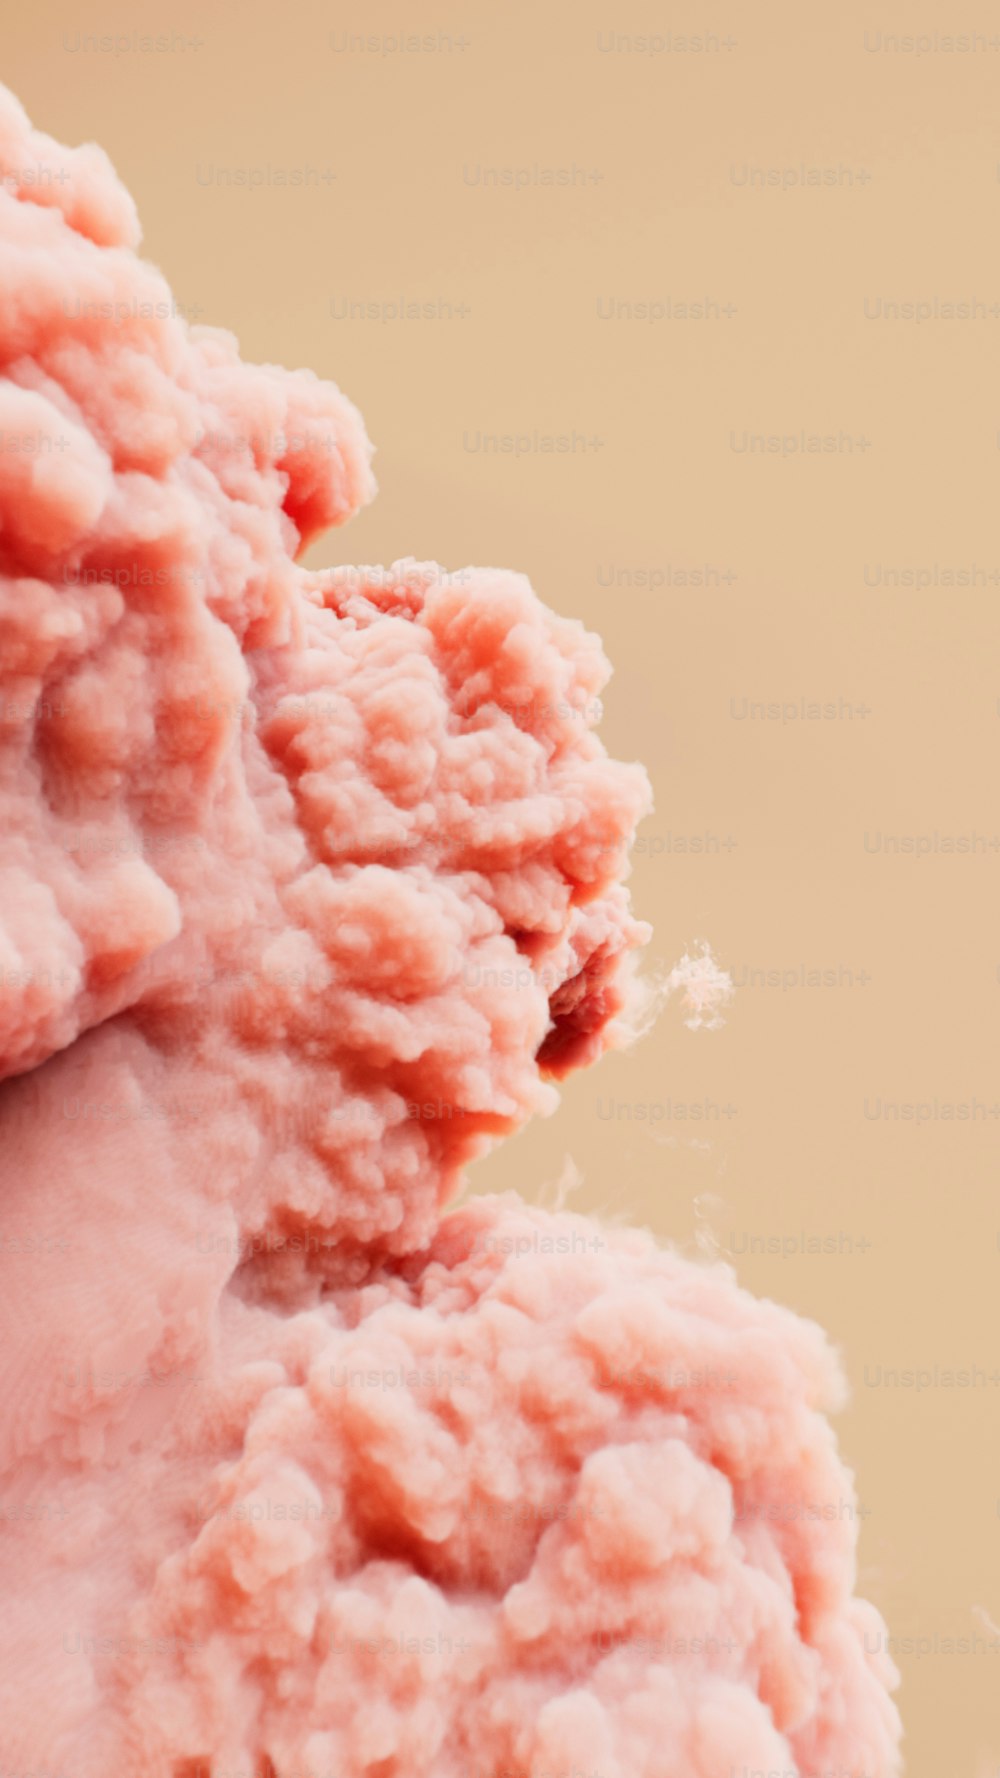 a close up of a pink substance